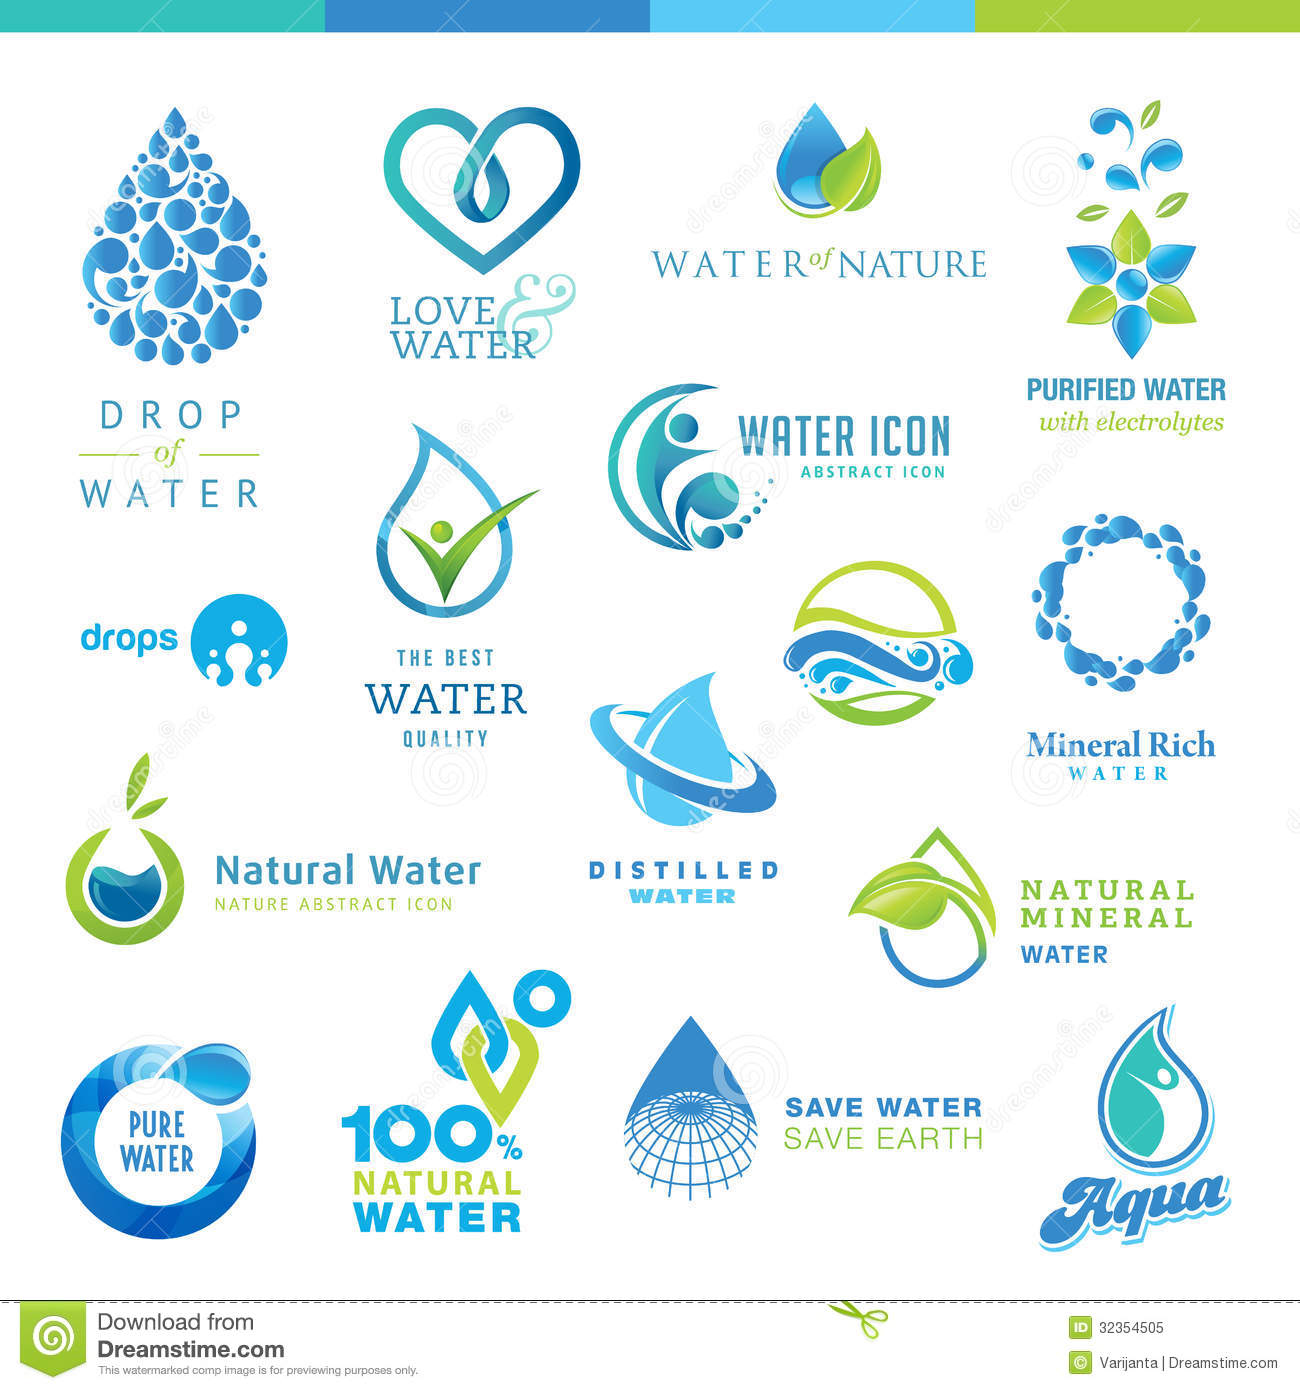 Free Water Companies Logos Images